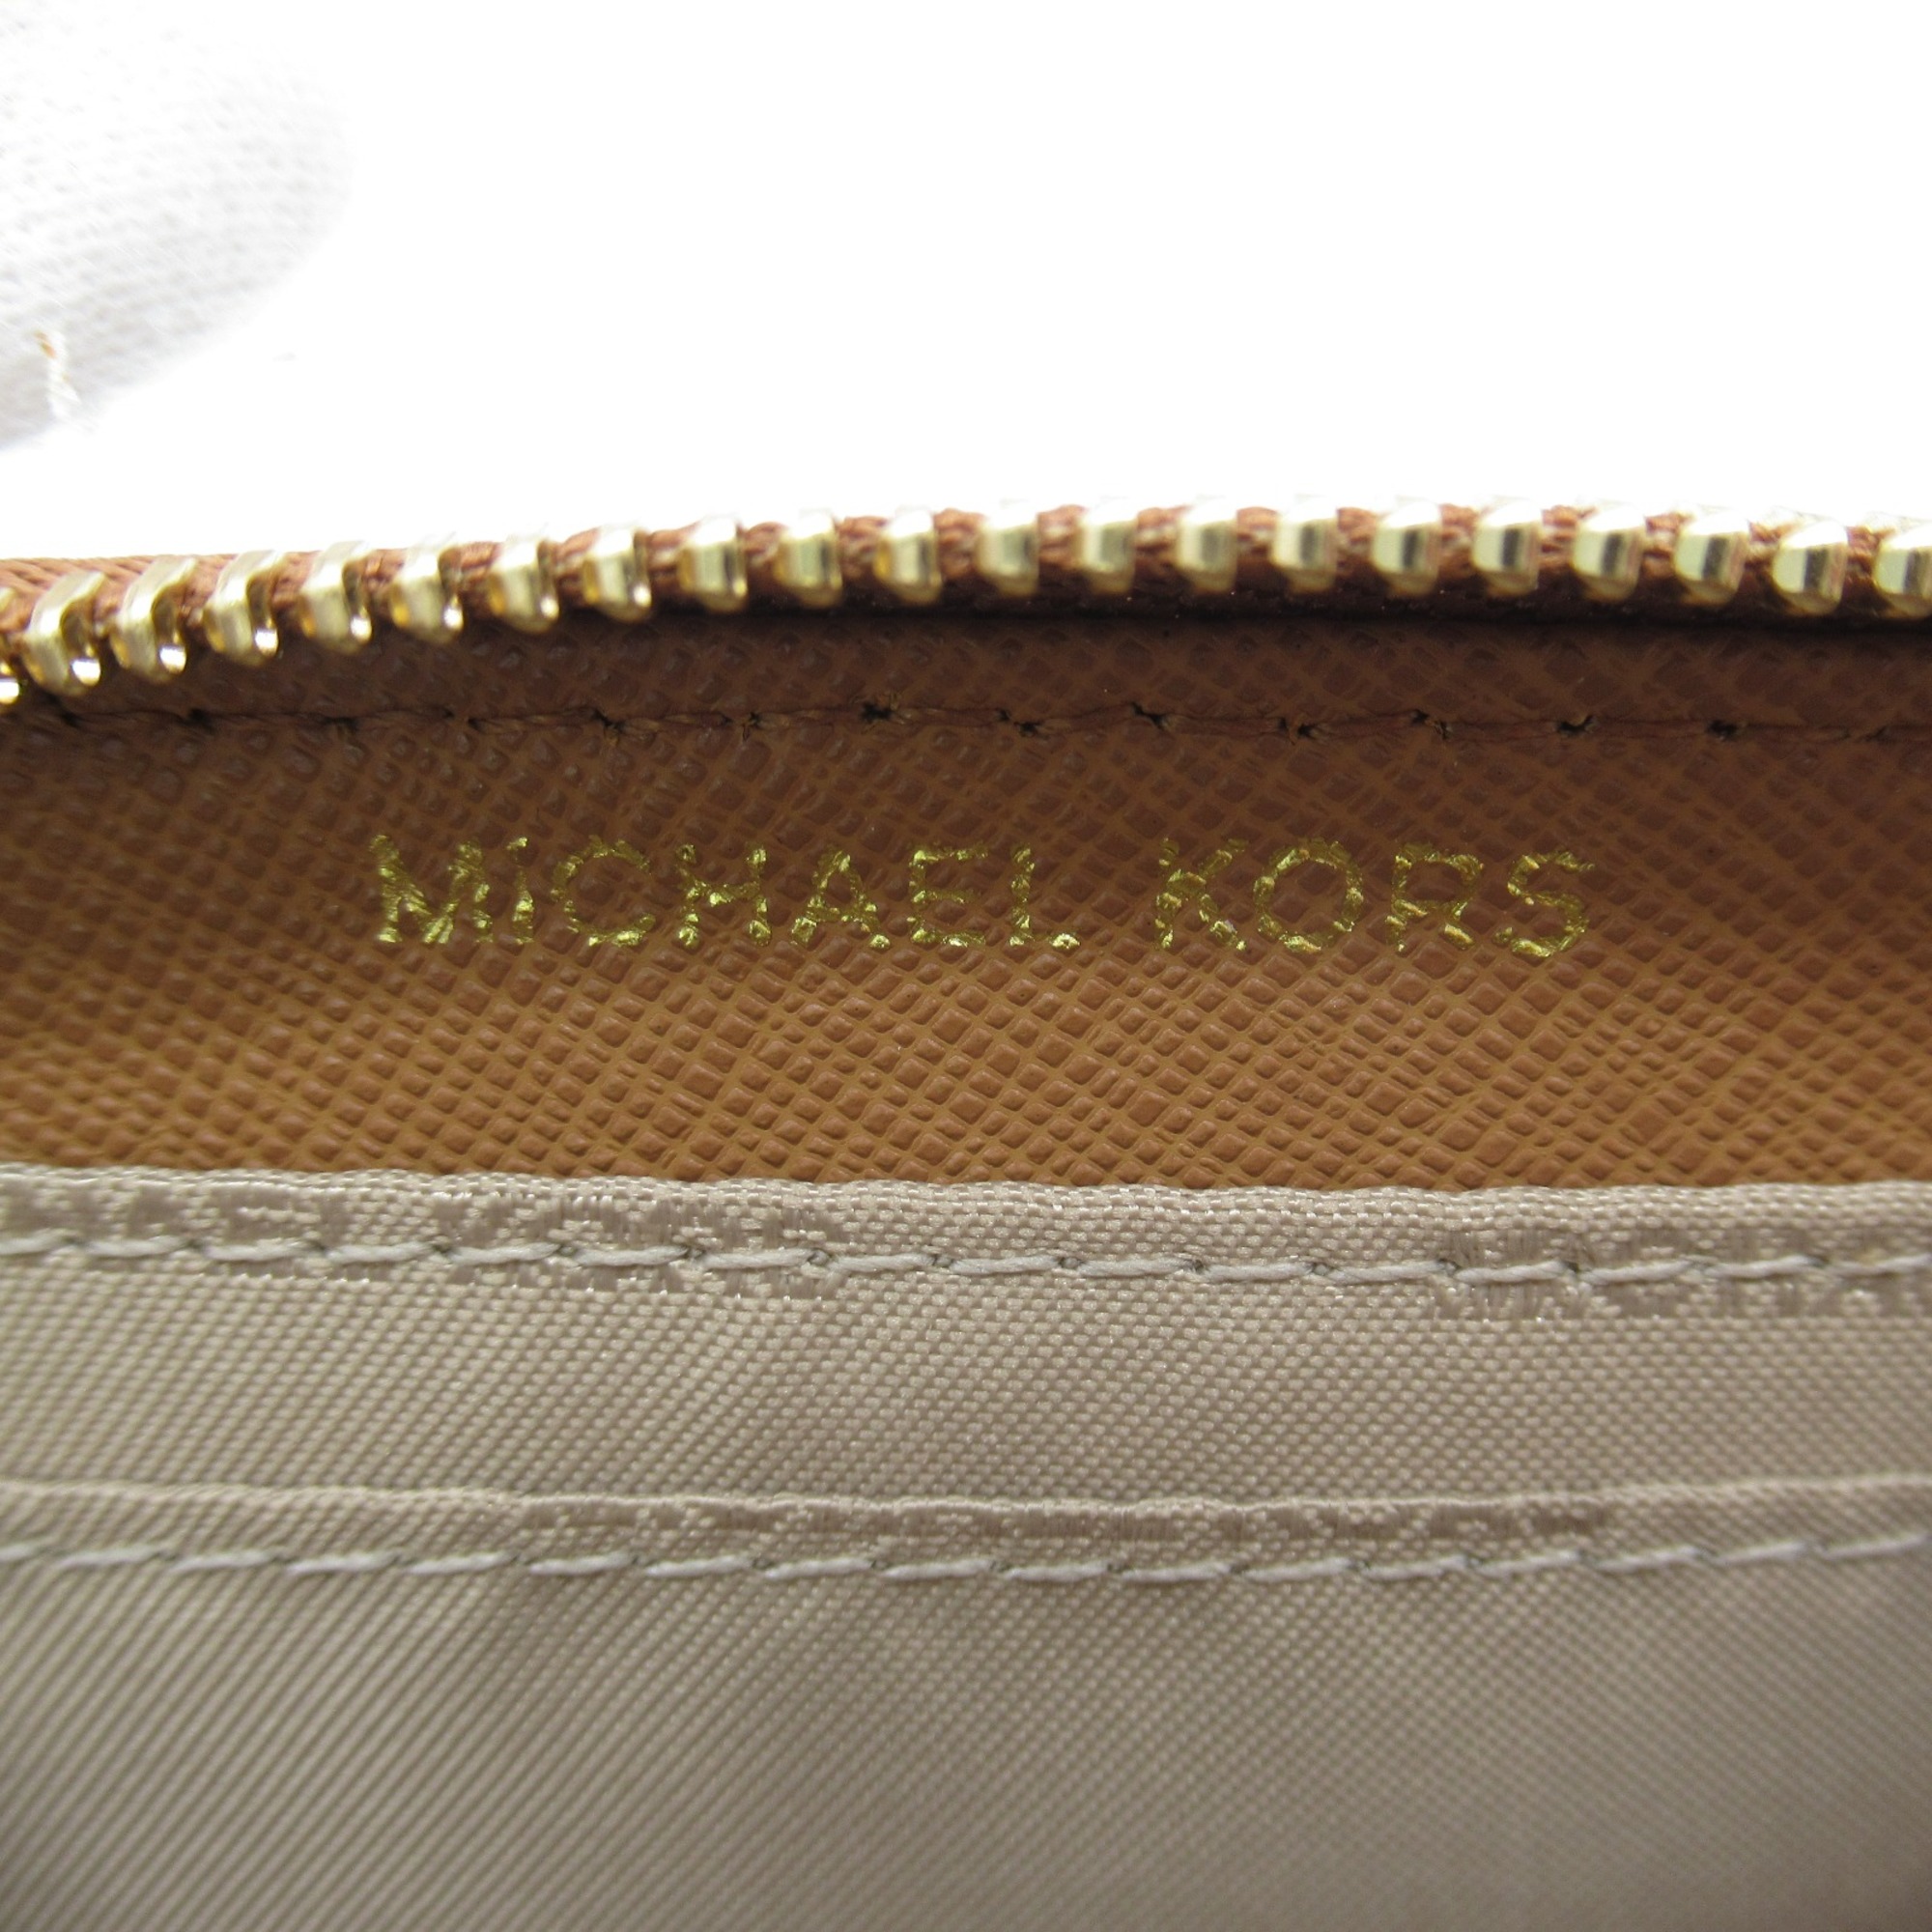 Michael Kors Round wallet Brown Acorn leather 32T8GF6Z1L203